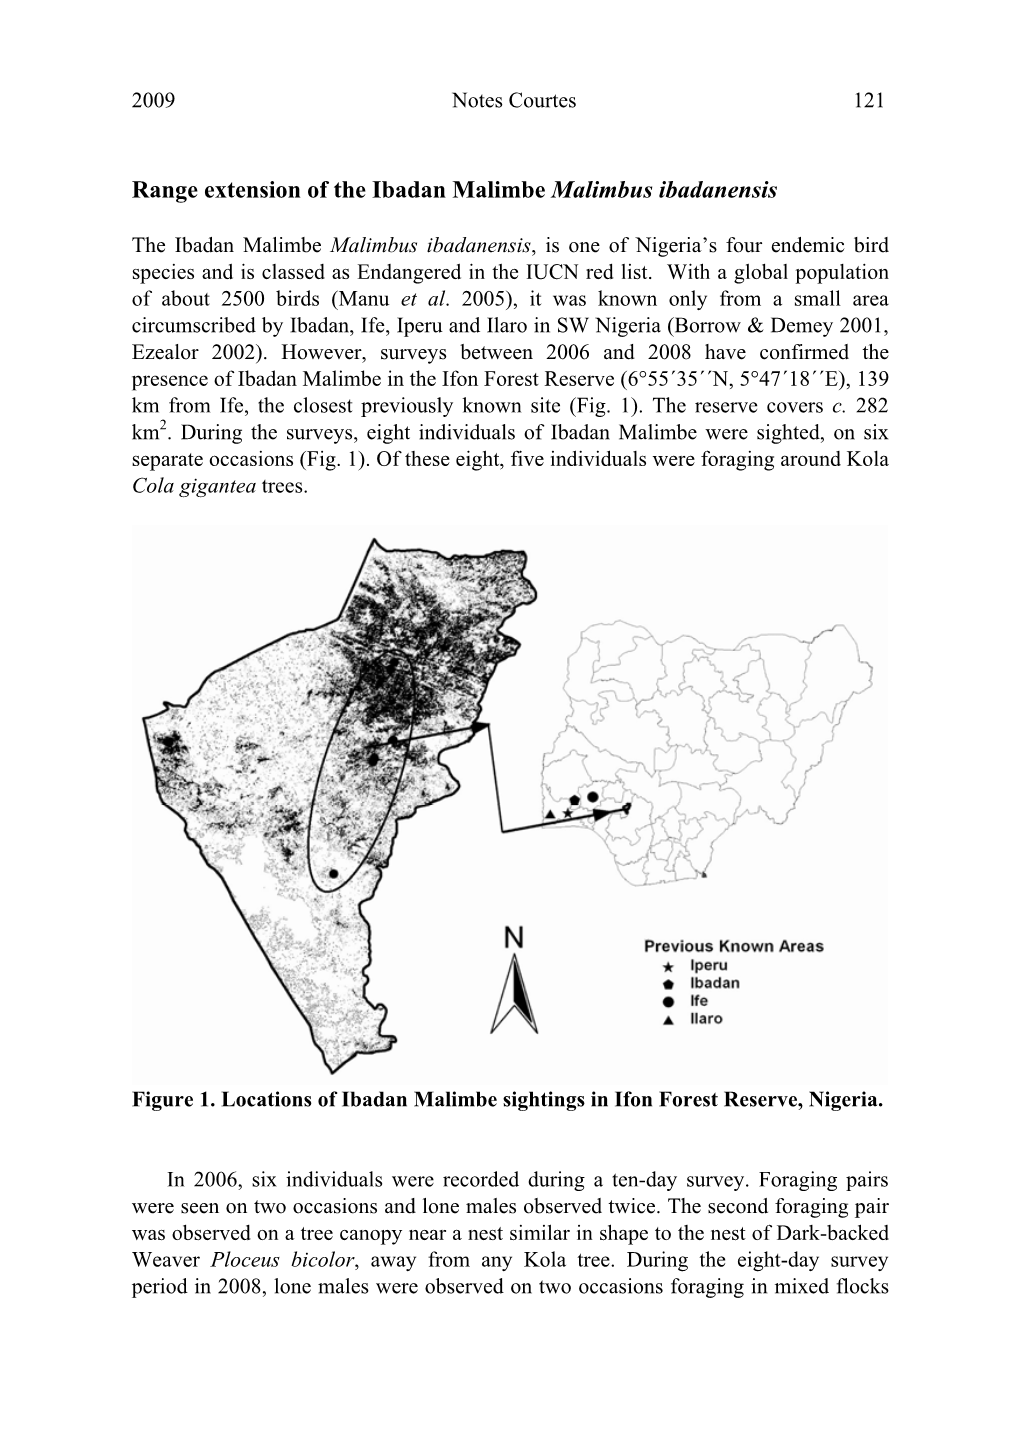 Range Extension of the Ibadan Malimbe Malimbus Ibadanensis